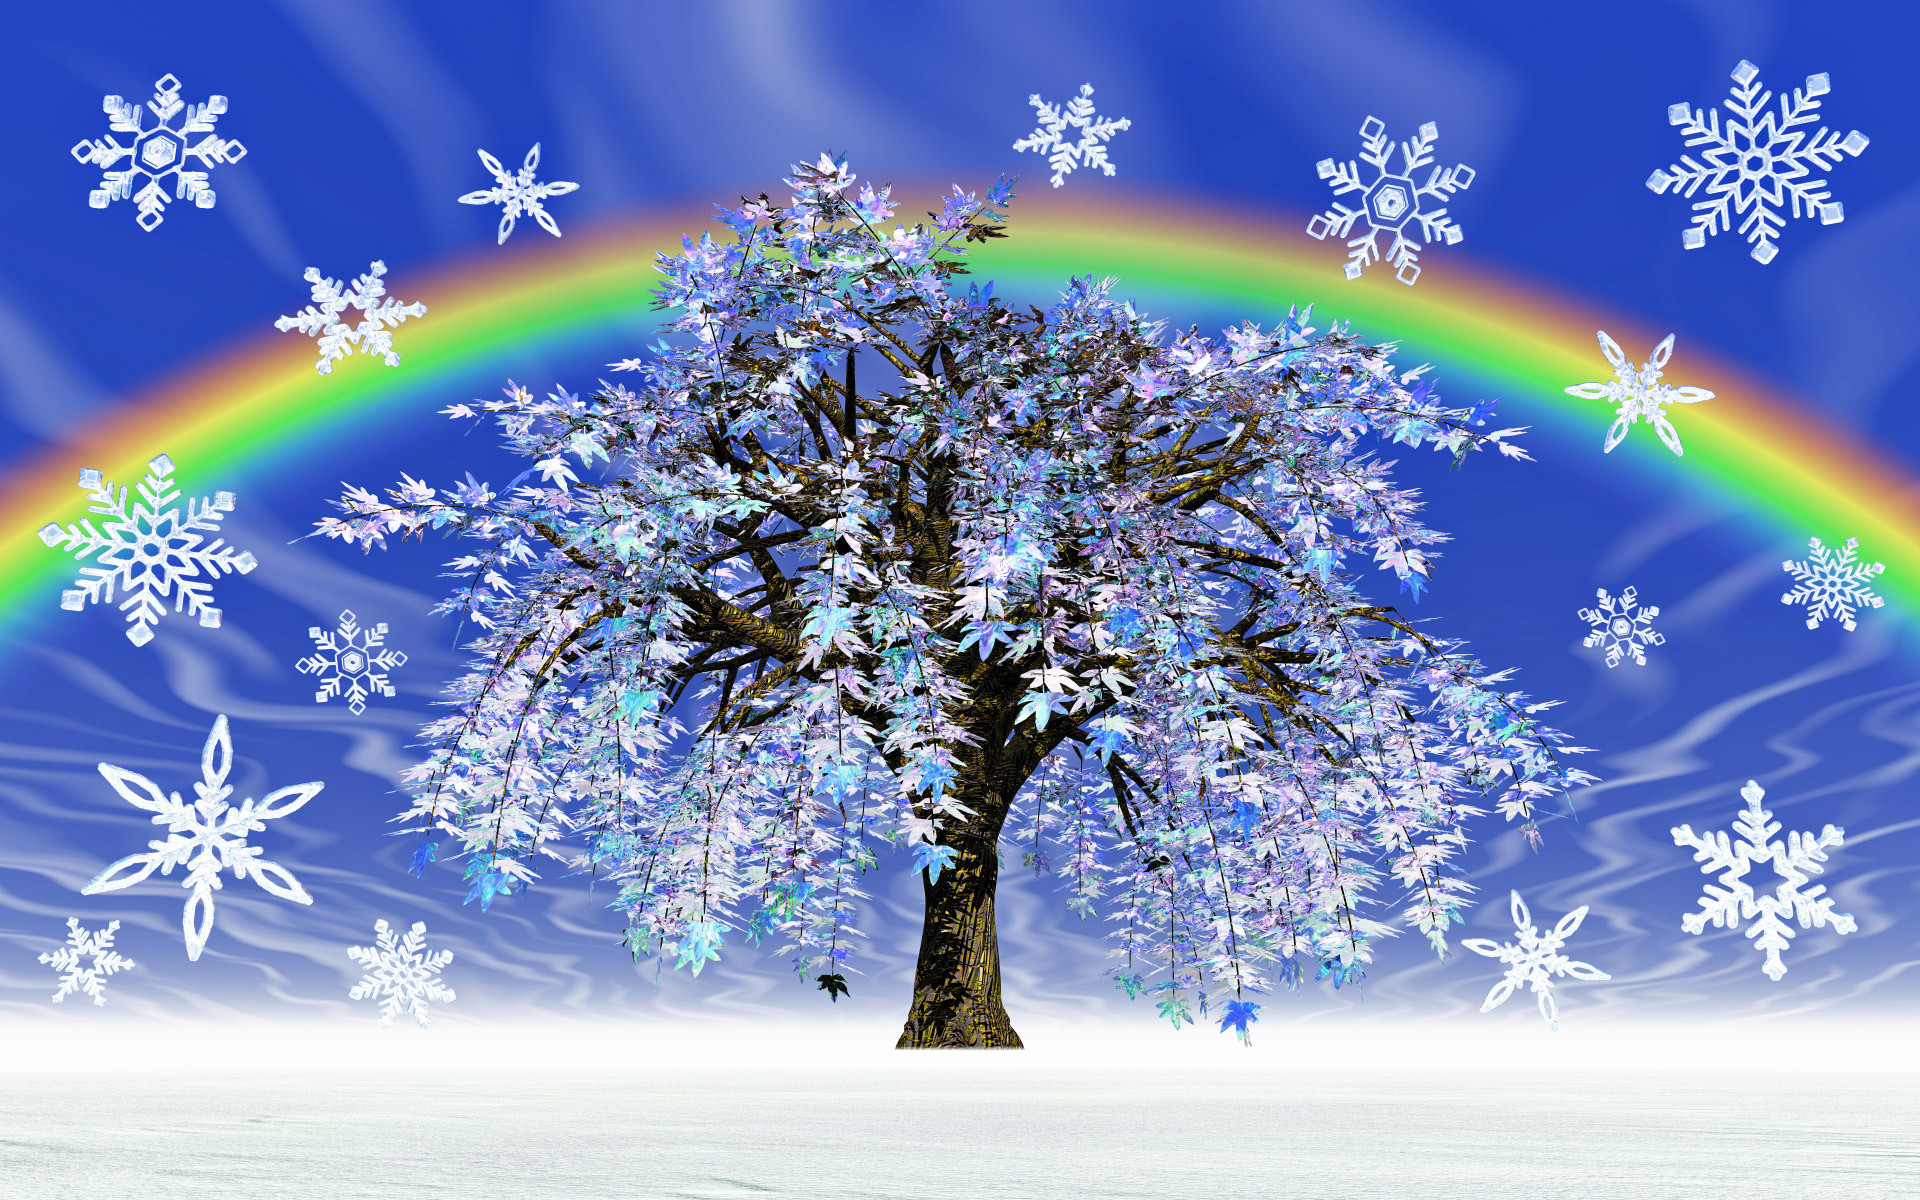 3dcg 虹と雪の結晶 壁紙19x10 壁紙館